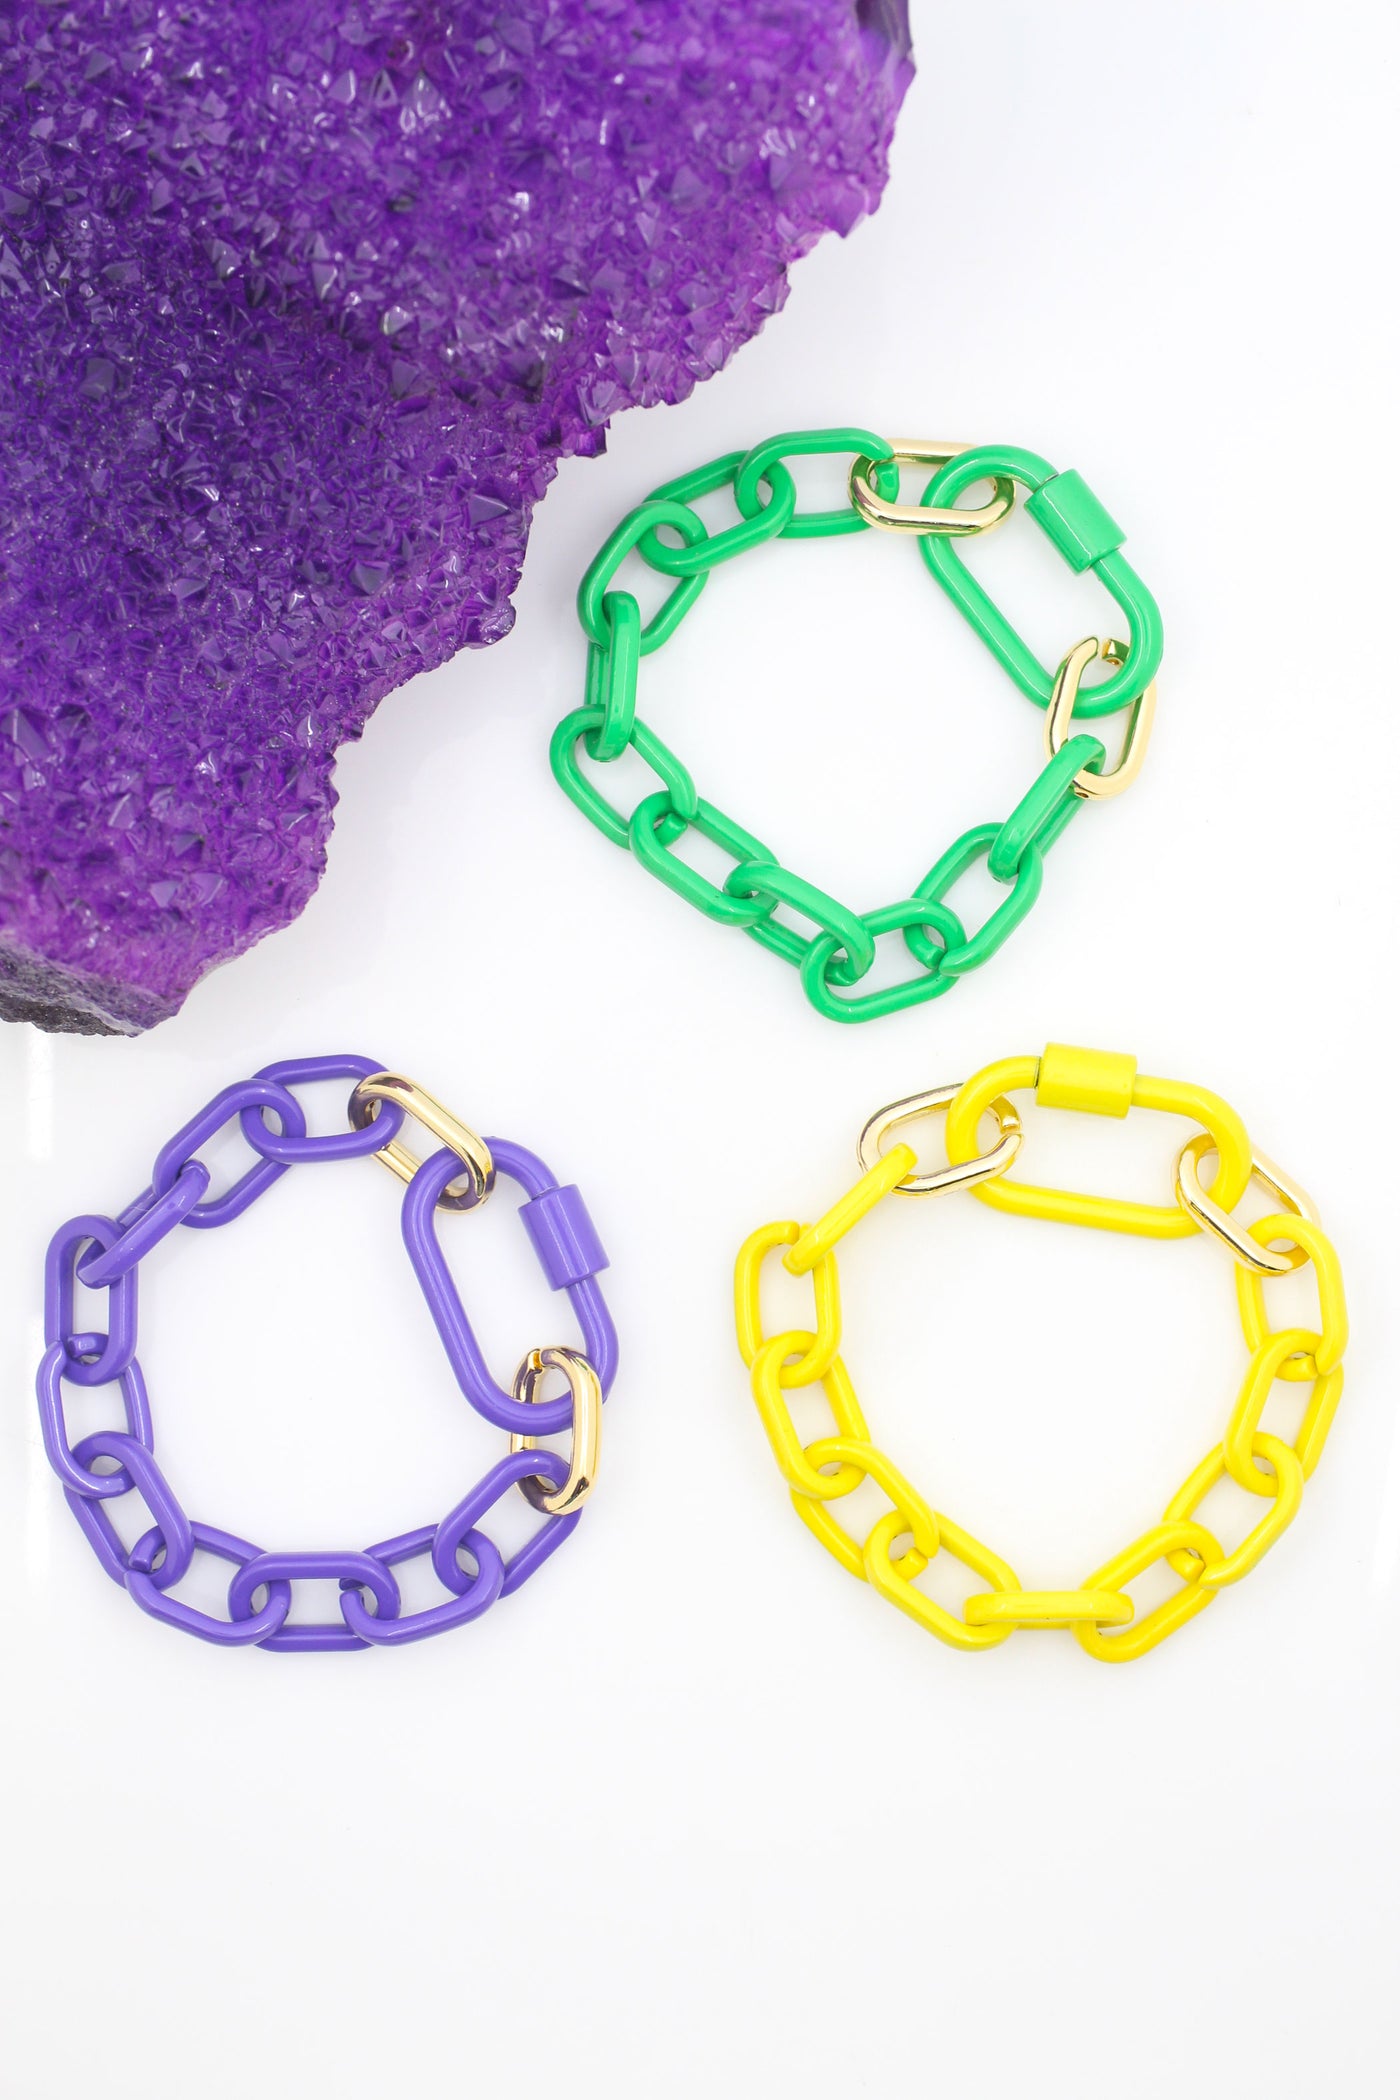 Mardi Gras Luxe Link Enamel Chain Bracelet with Carabiner Lock Clasp